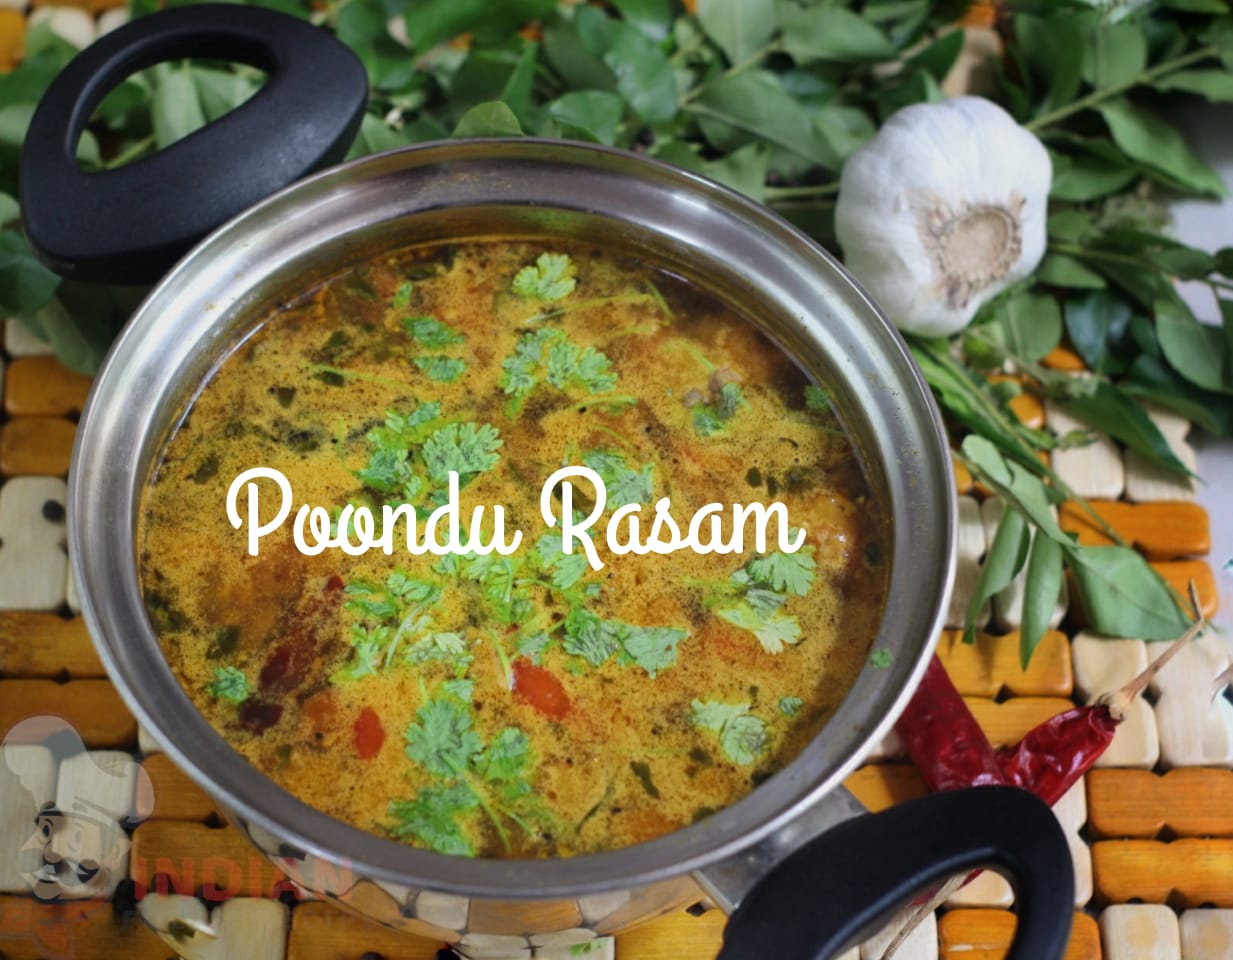 how to make poondu rasam recipe